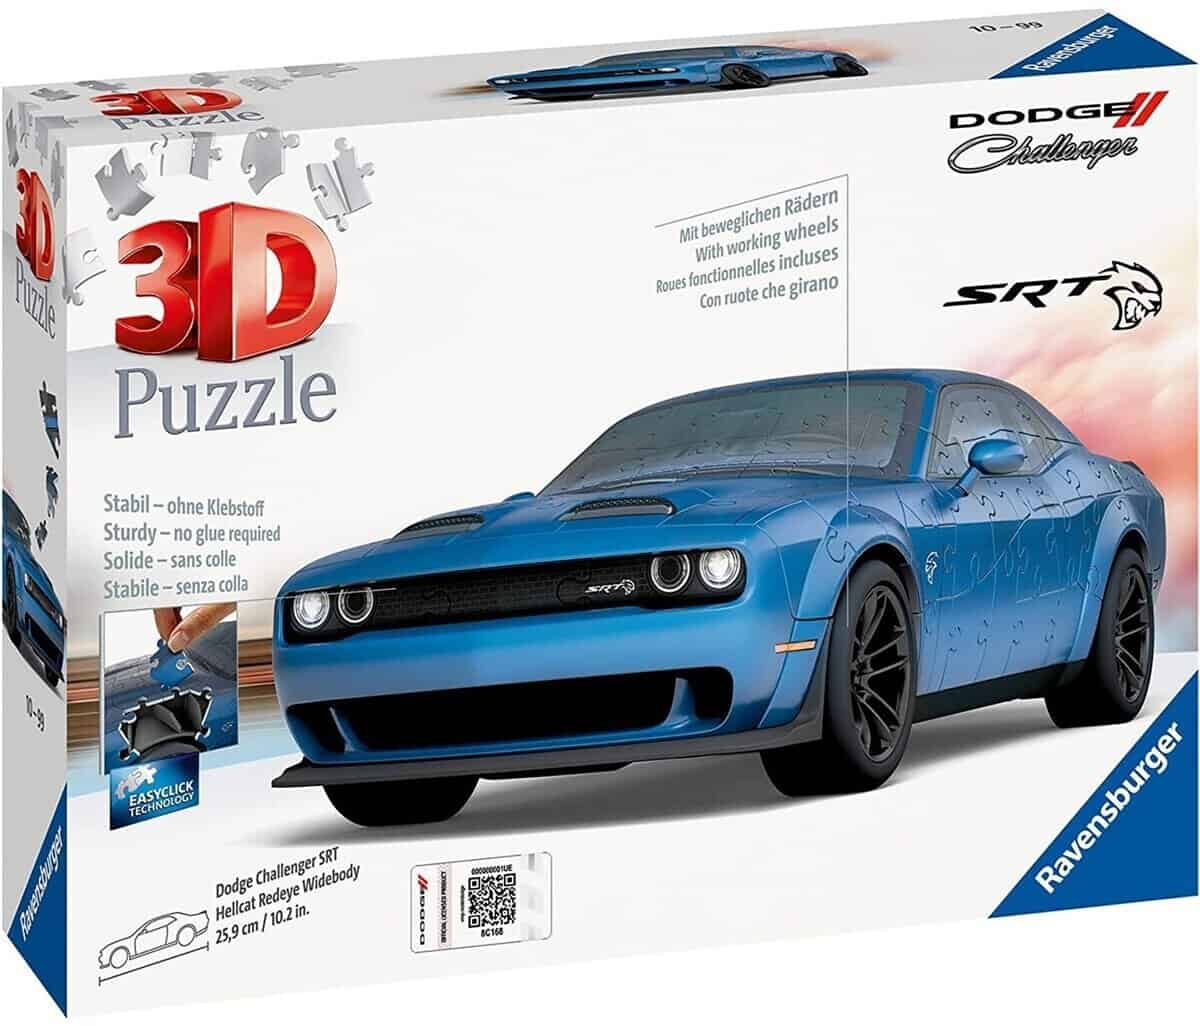 Ravensburger 3D-Puzzle Dodge Challenger Hellcat Redeye